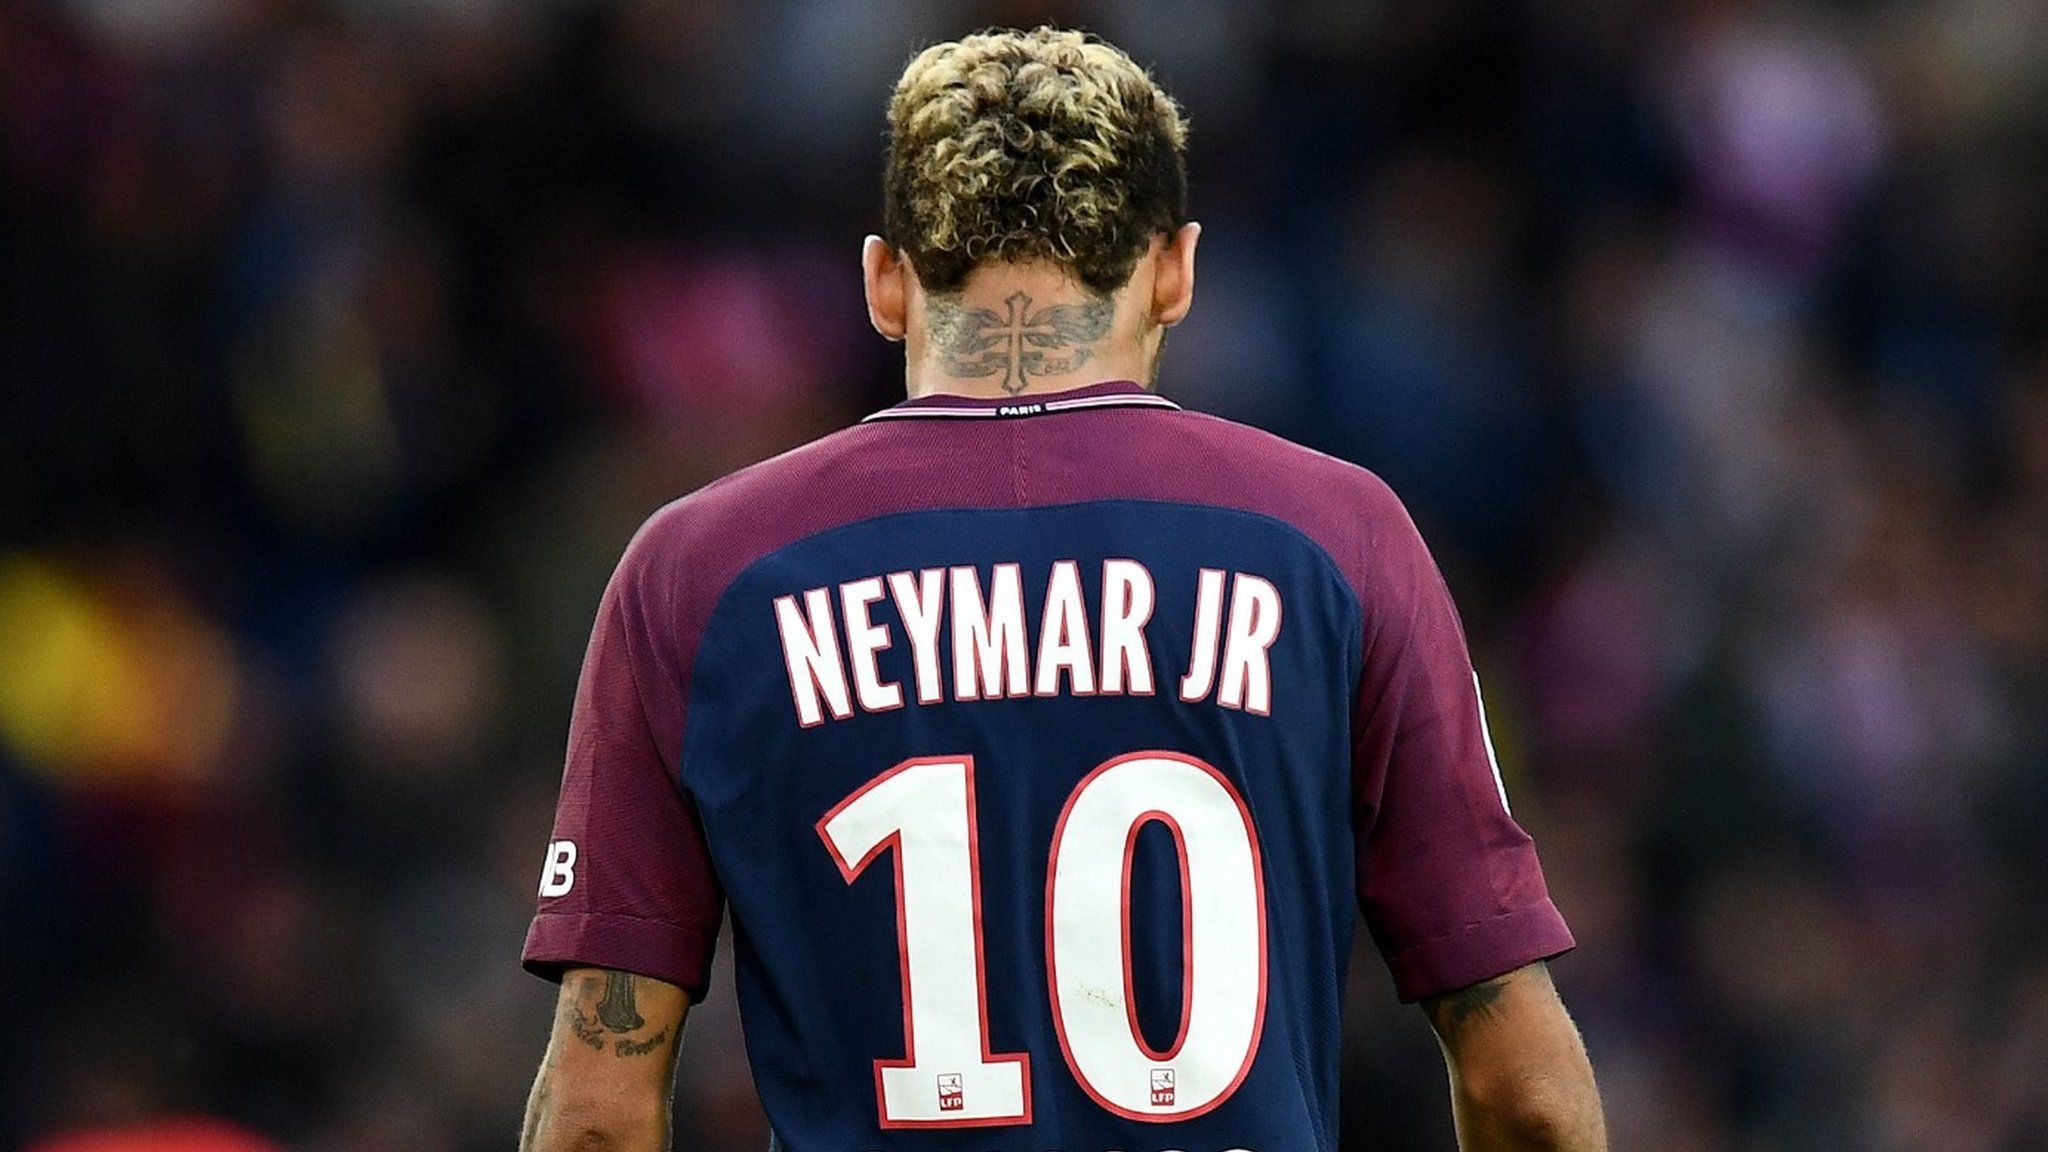 Neymar of Paris St-Germain